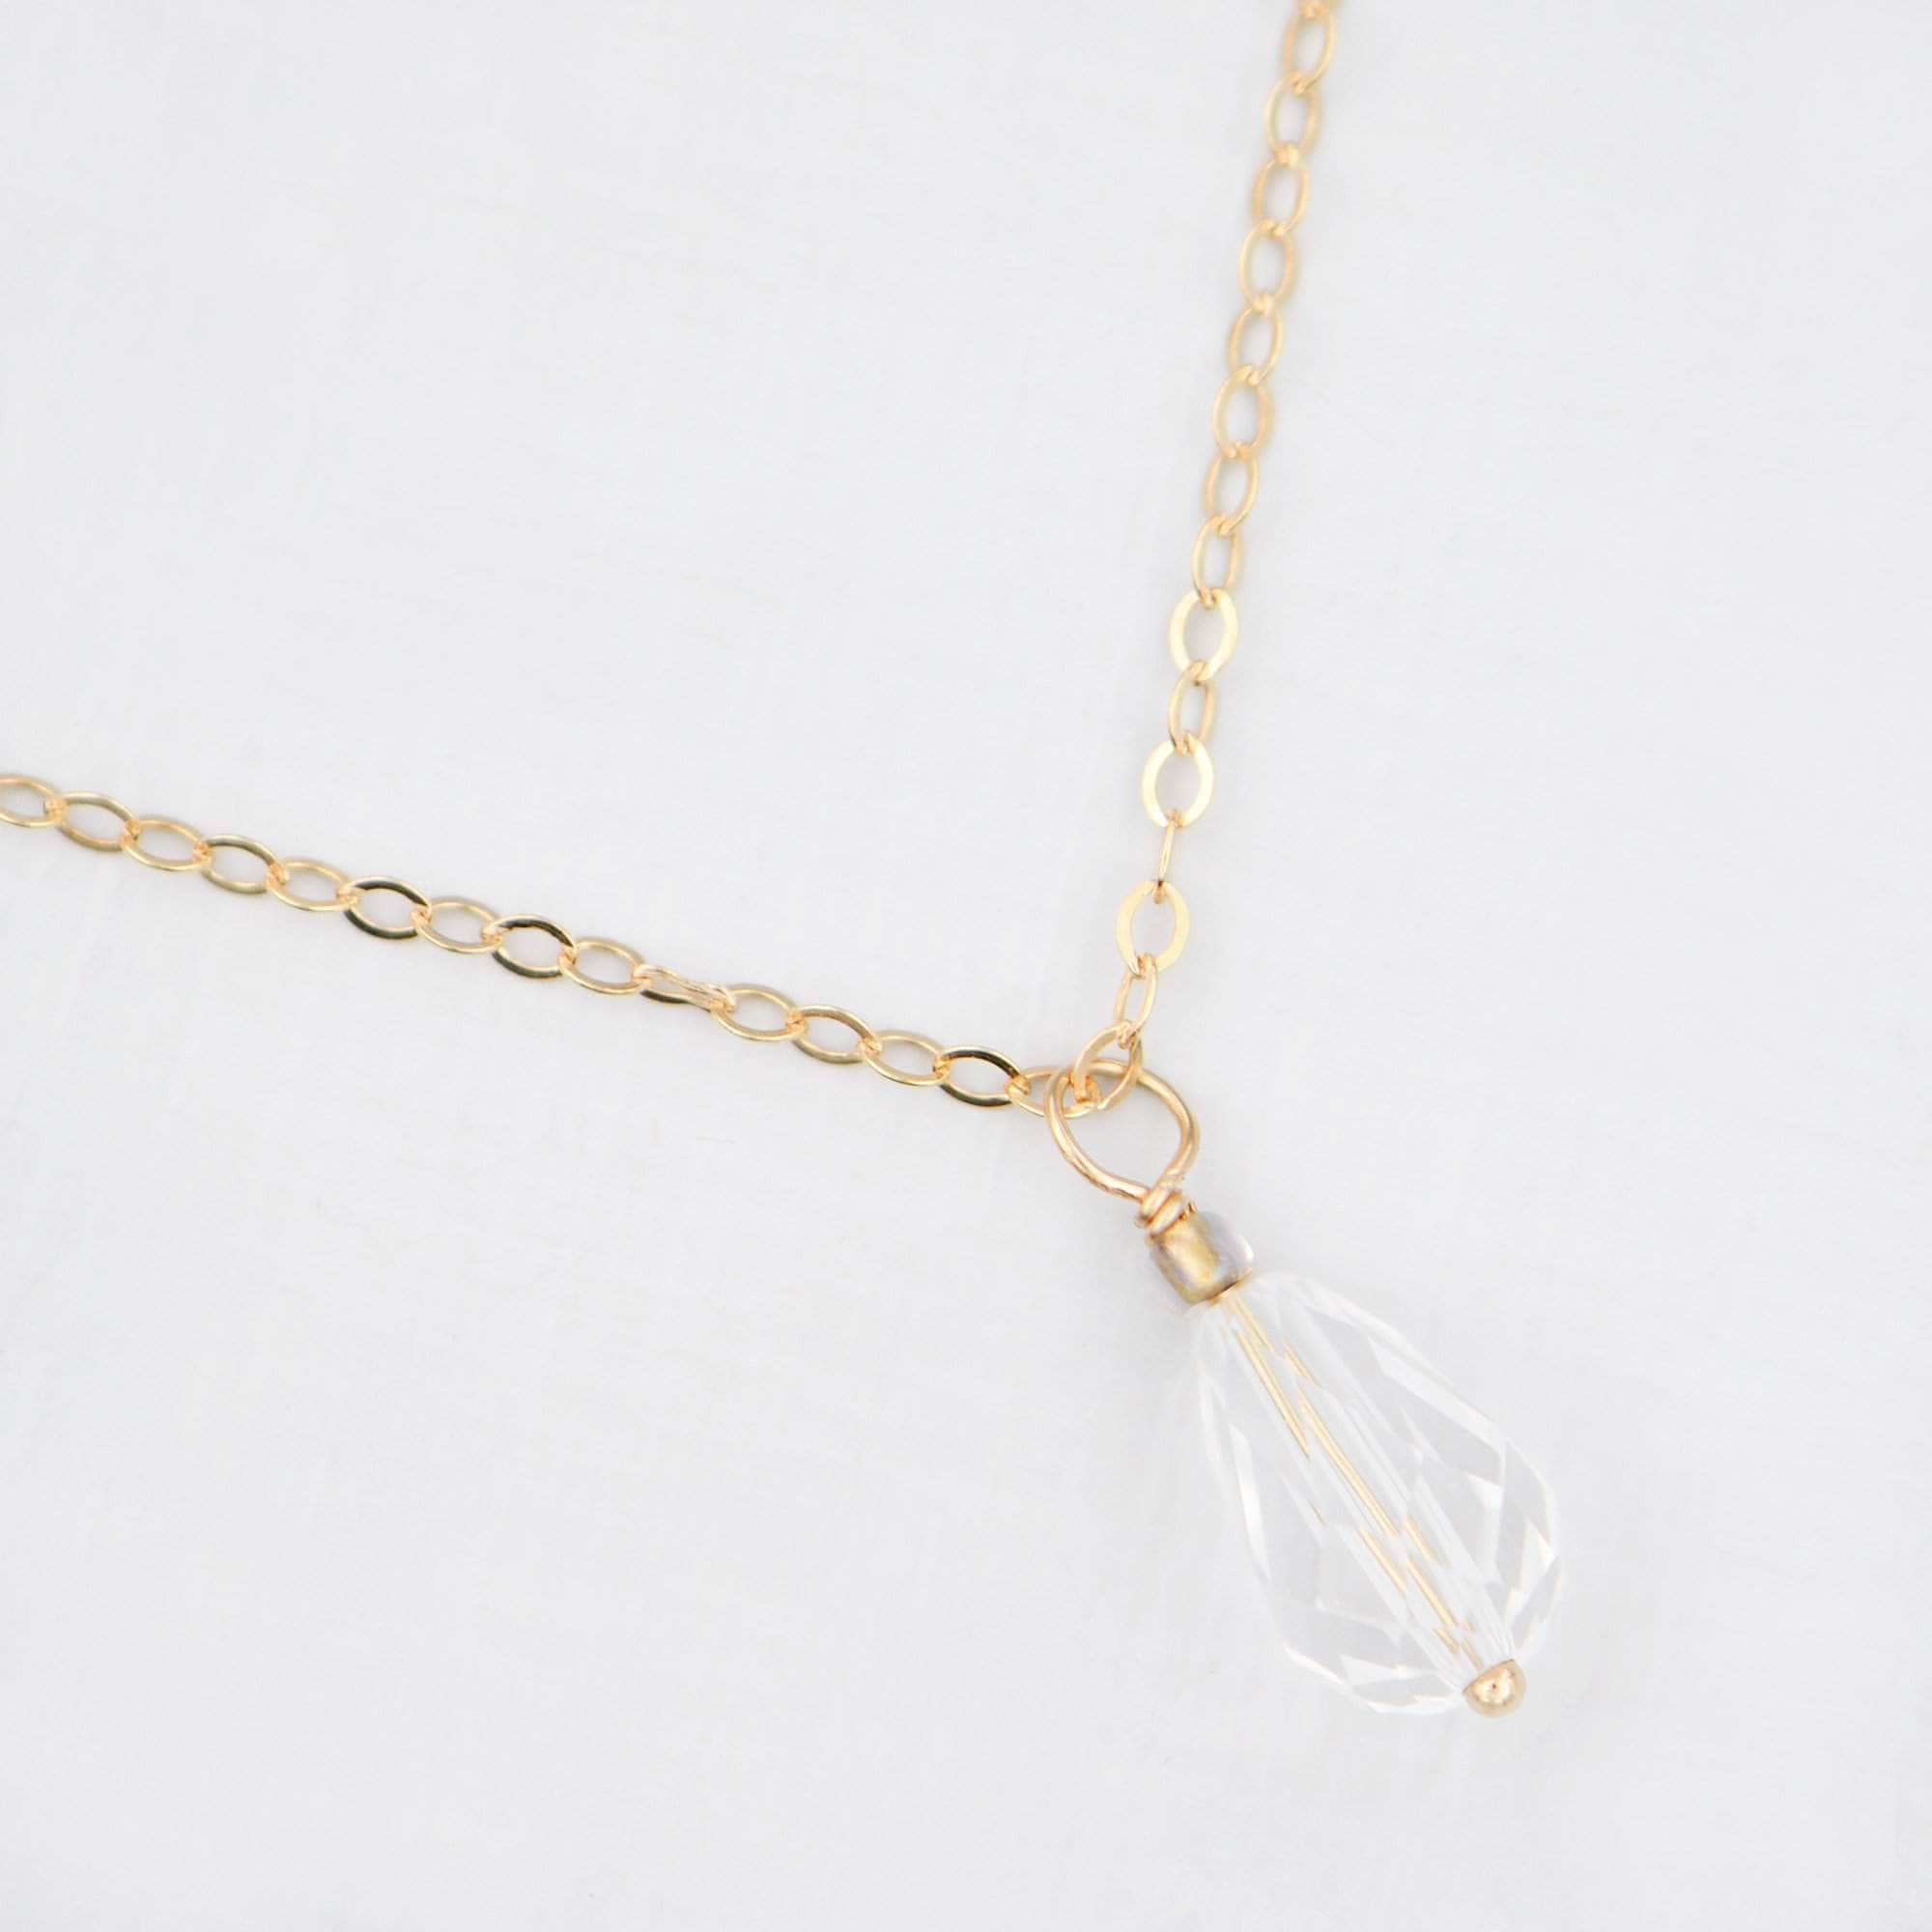 Wedding Necklace 14k gold filled Gold filled crystal back drop necklace lariat for wedding - 'Clea'